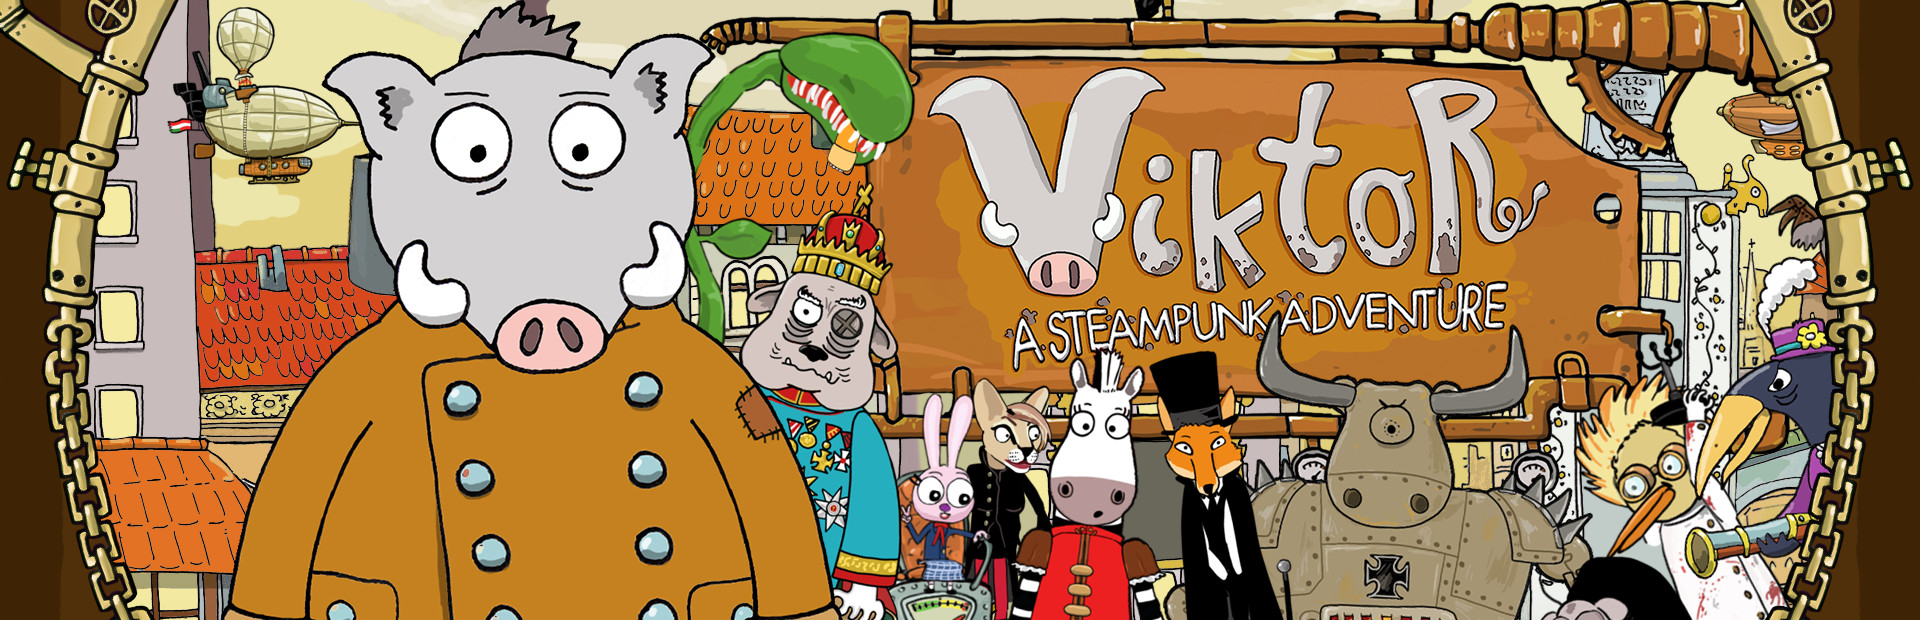 Viktor, a Steampunk Adventure cover image